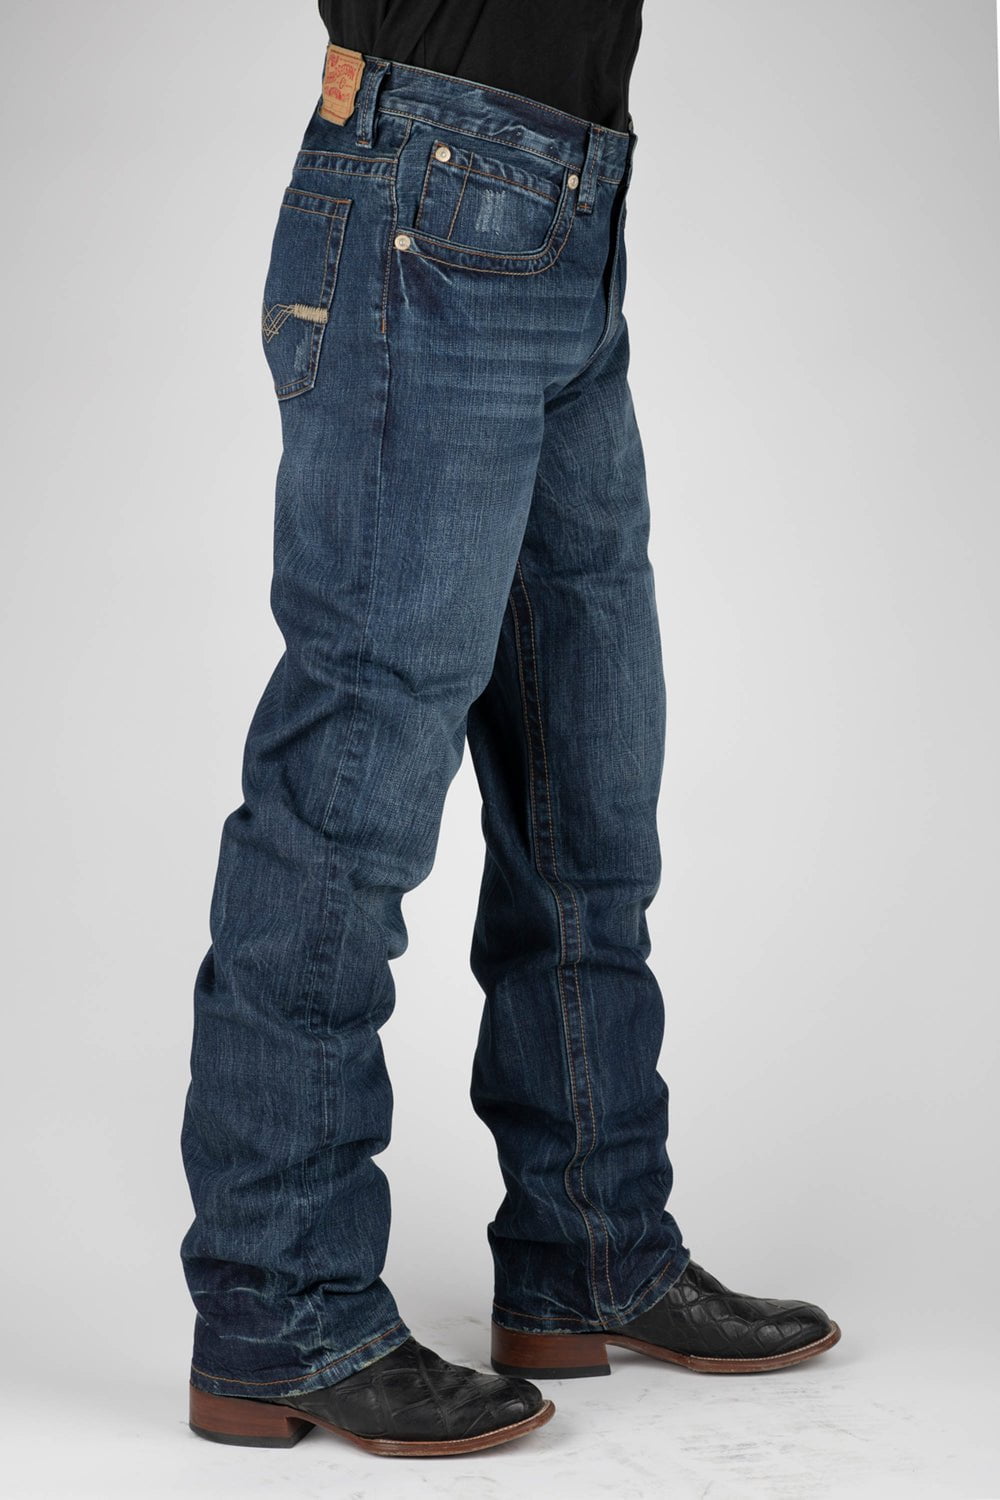 Tin Haul 1206 Mens Blue 100% Cotton Deep V Jeans – The Western Company